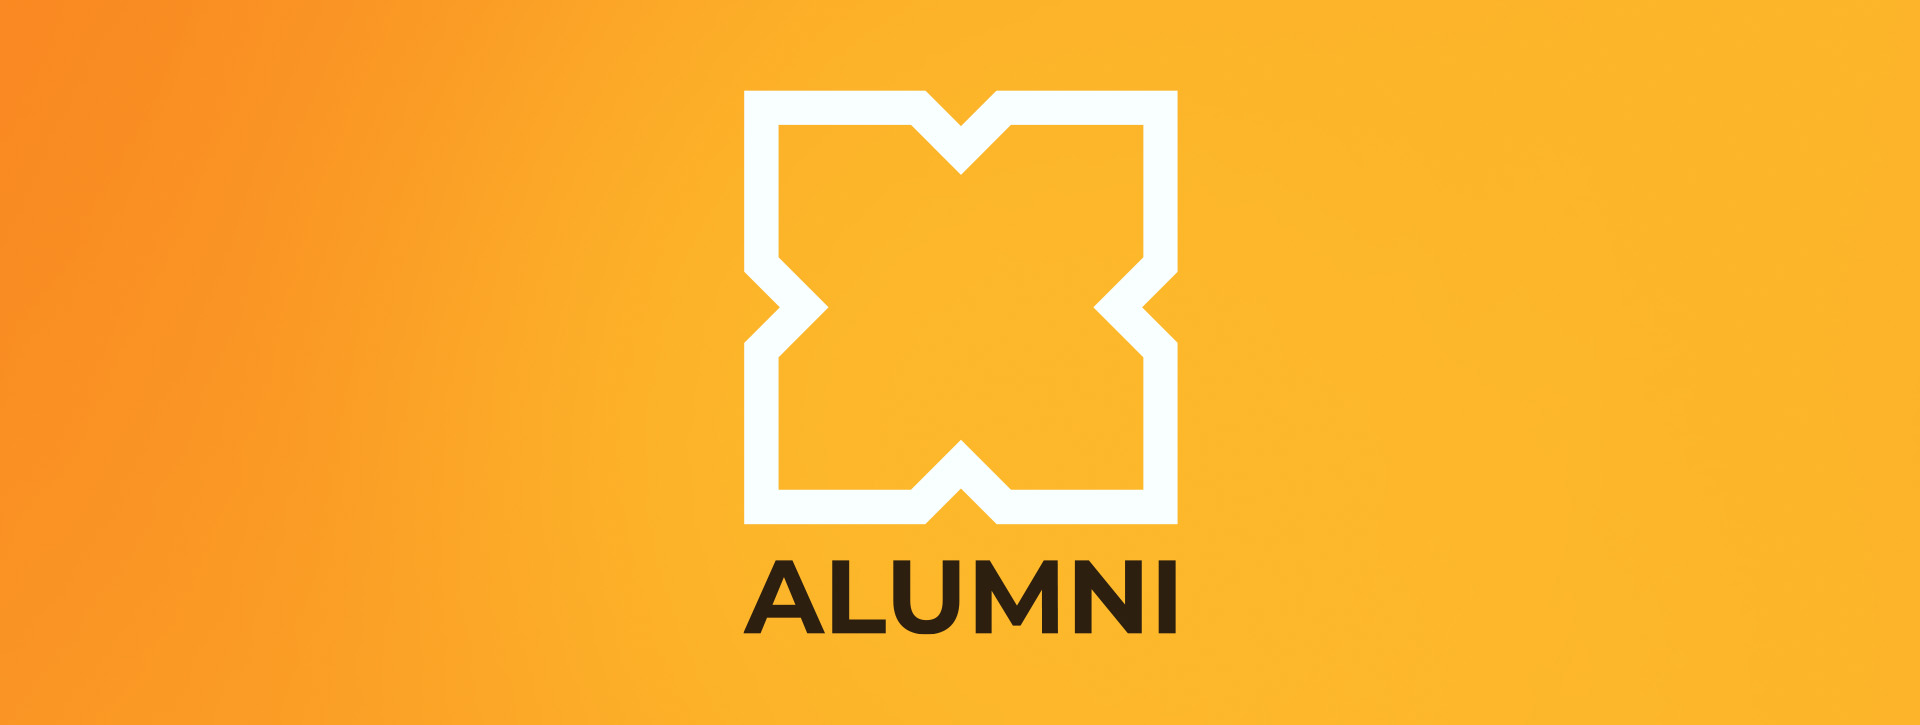 Xamk alumni -logo